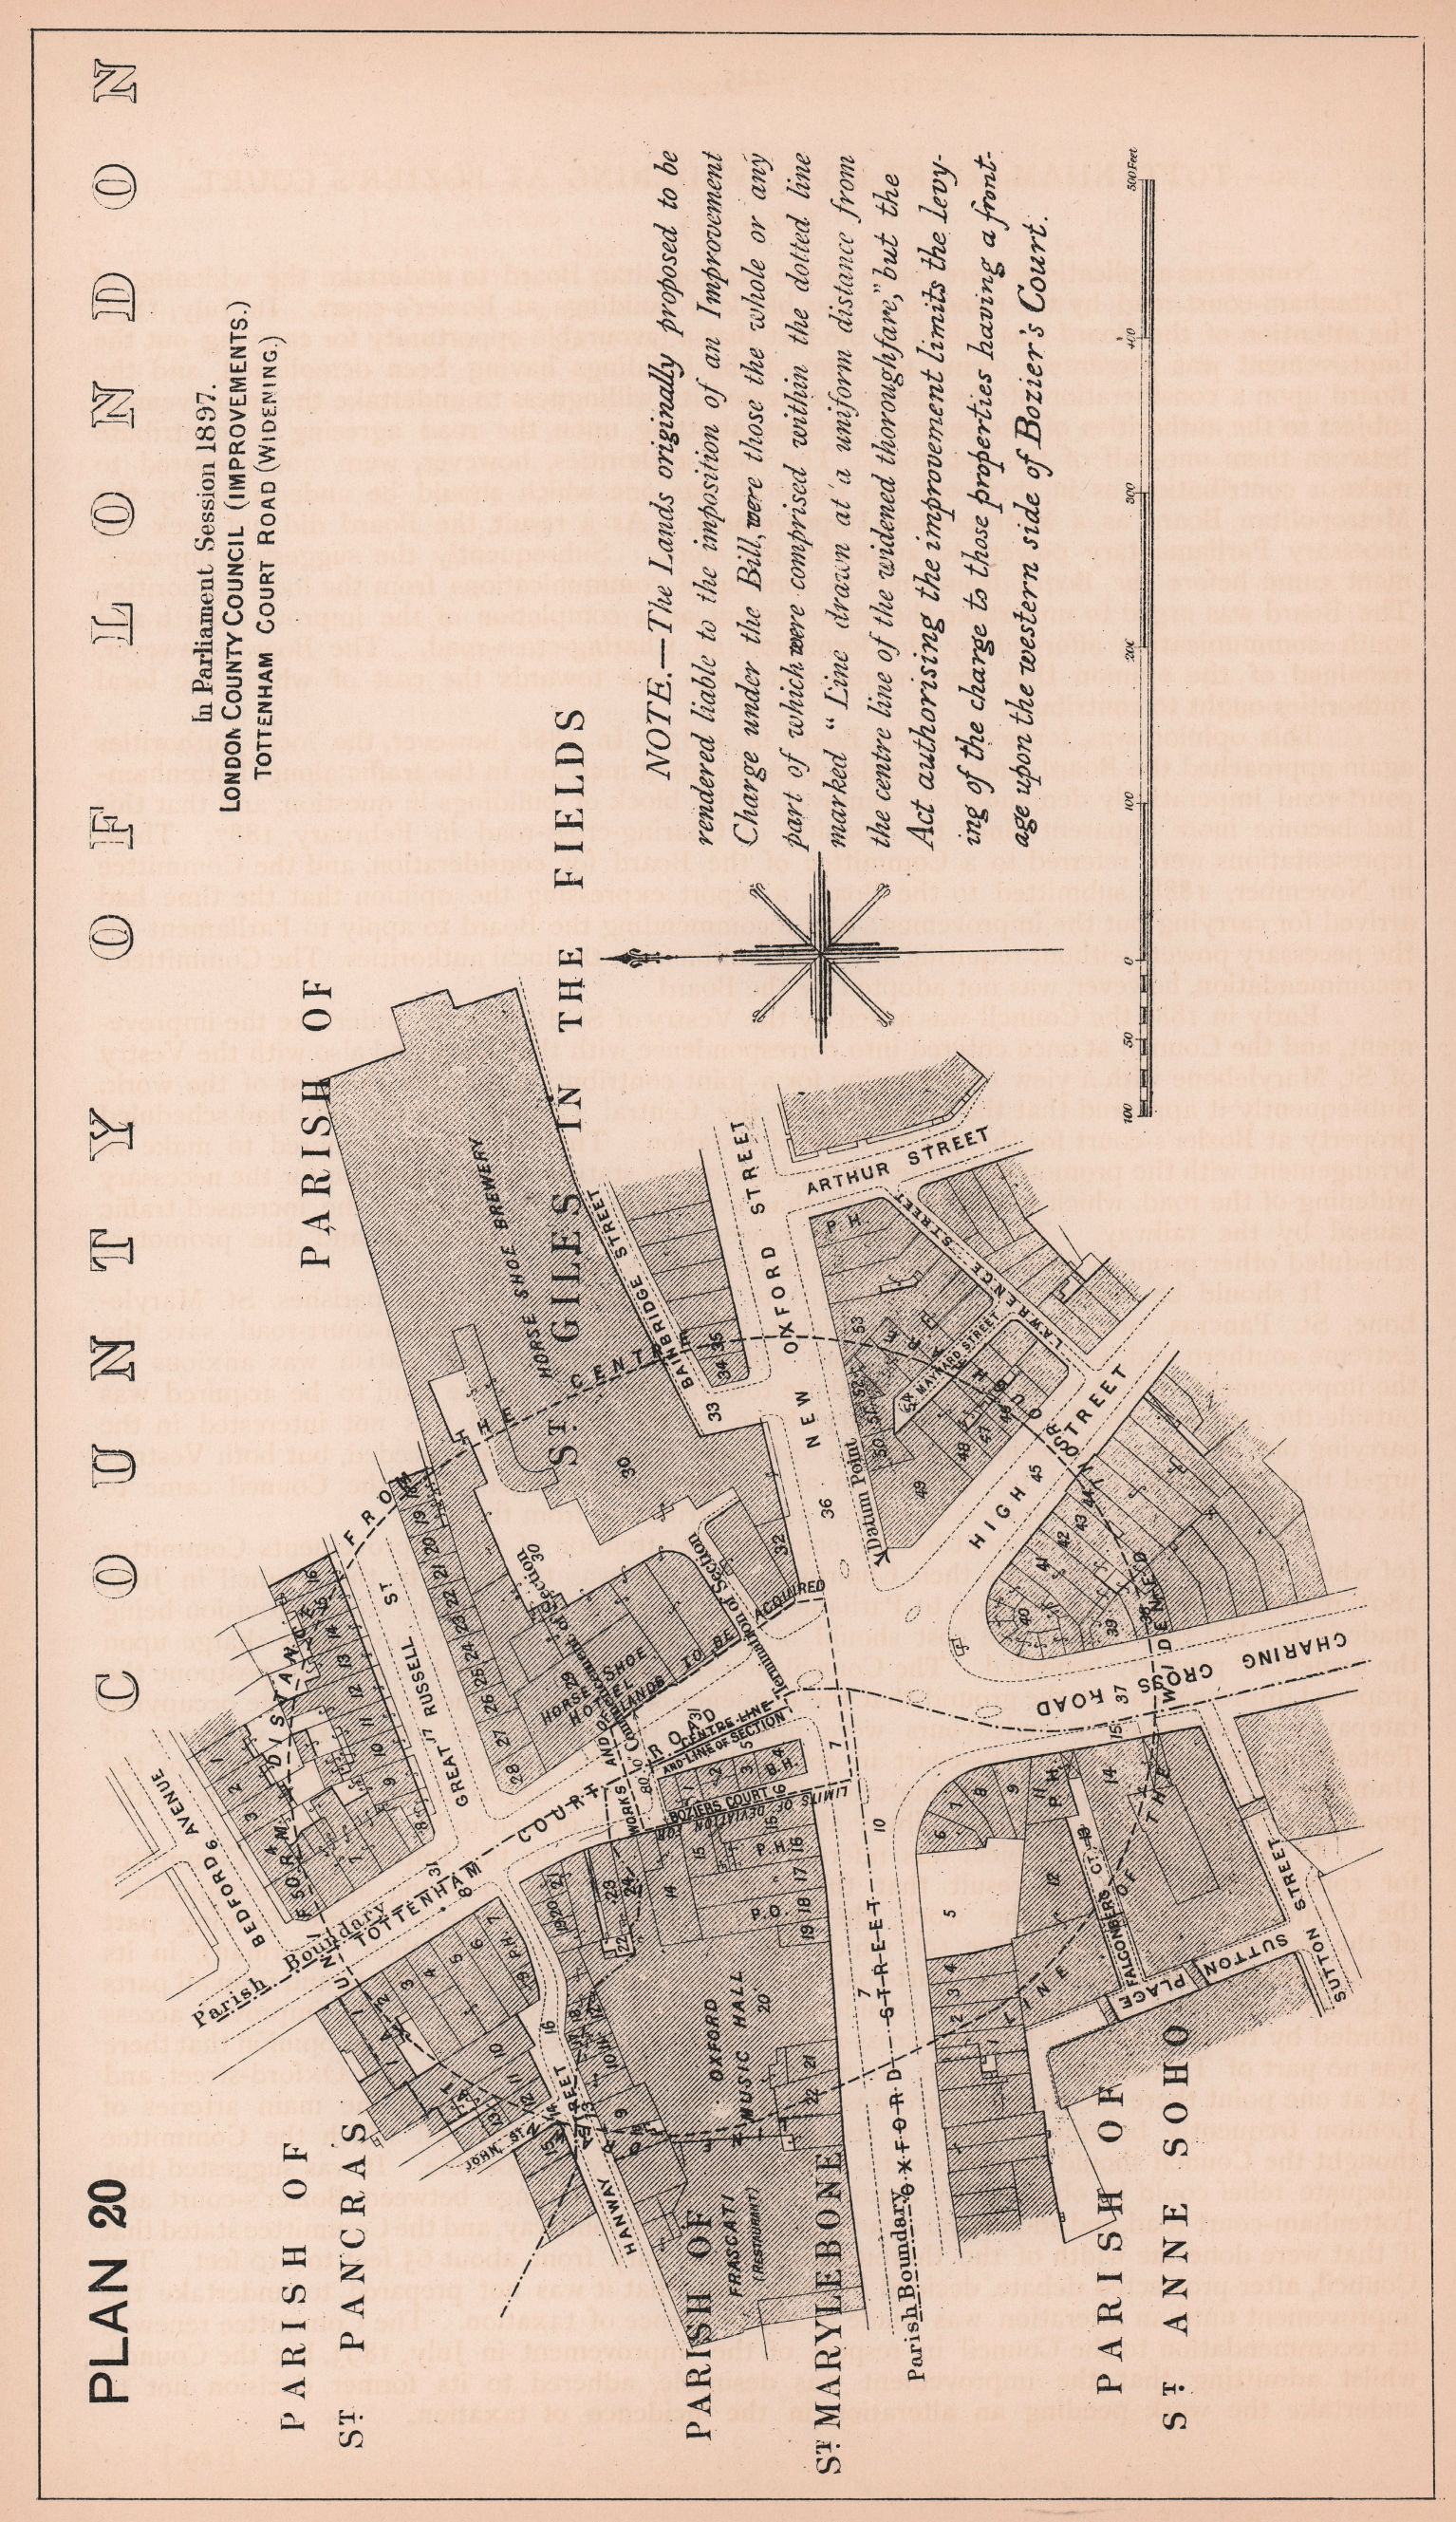 1897 Tottenham Court Road widening. Charing Cross Road. Oxford Street 1898 map